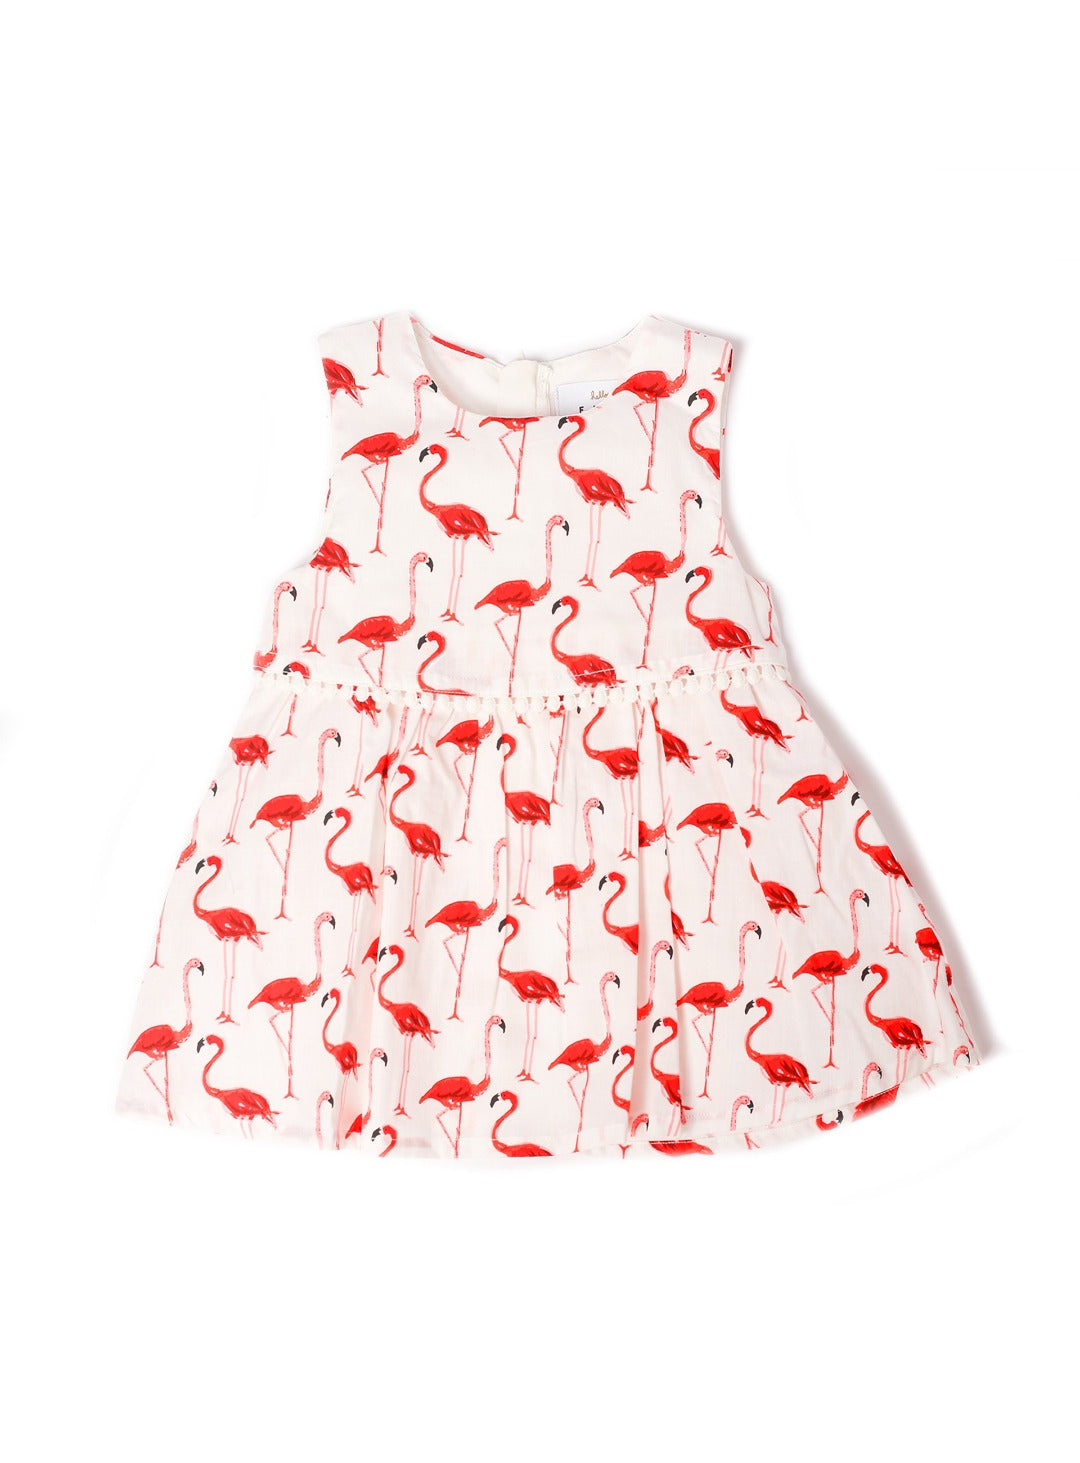 white sleeveless dress with red flamingo pattern